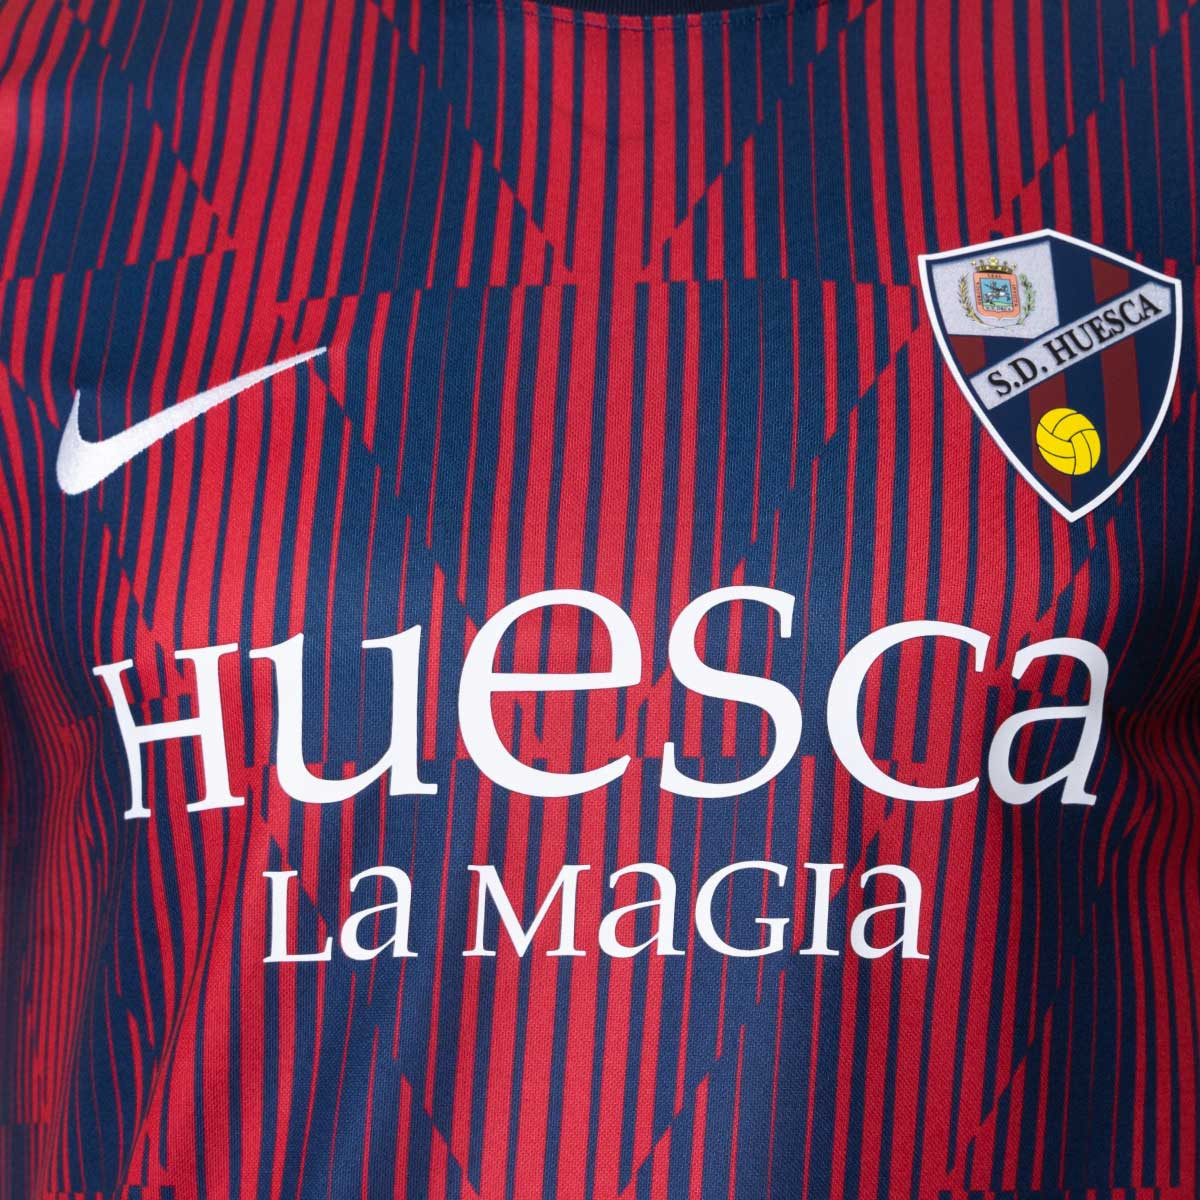 Camiseta Nike SD Huesca Equipación Stadium Midnight Navy-Gym Red-Obsidian-White - Fútbol Emotion